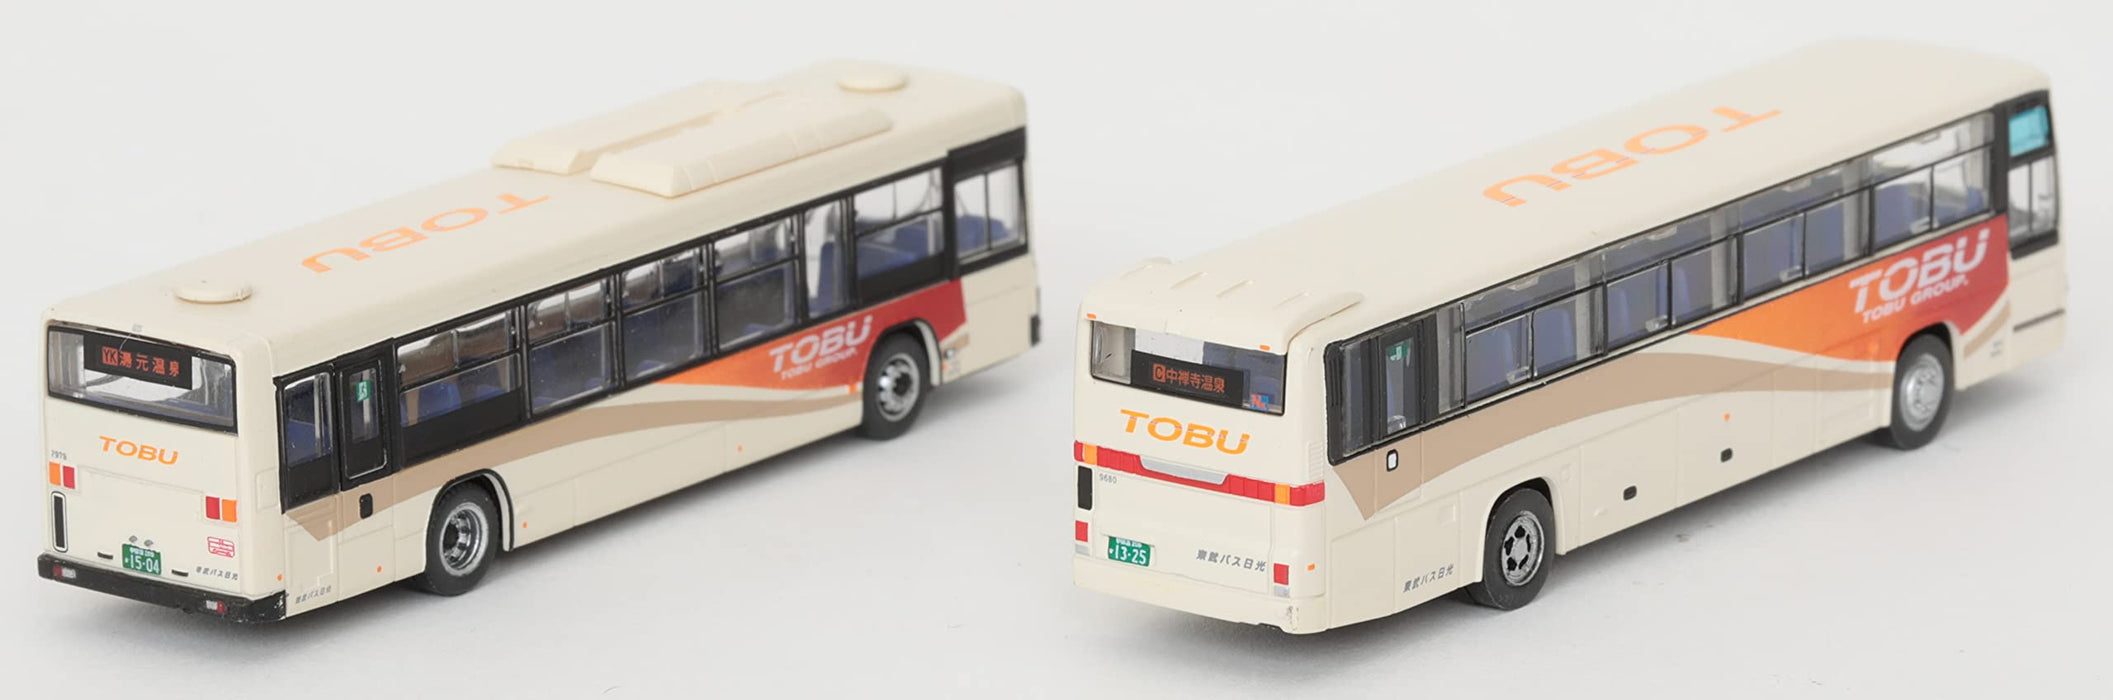 Tomytec Bus Collection 17 Tobu Bus Nikko Lake Chuzenji Yumoto Onsen Diorama 315544